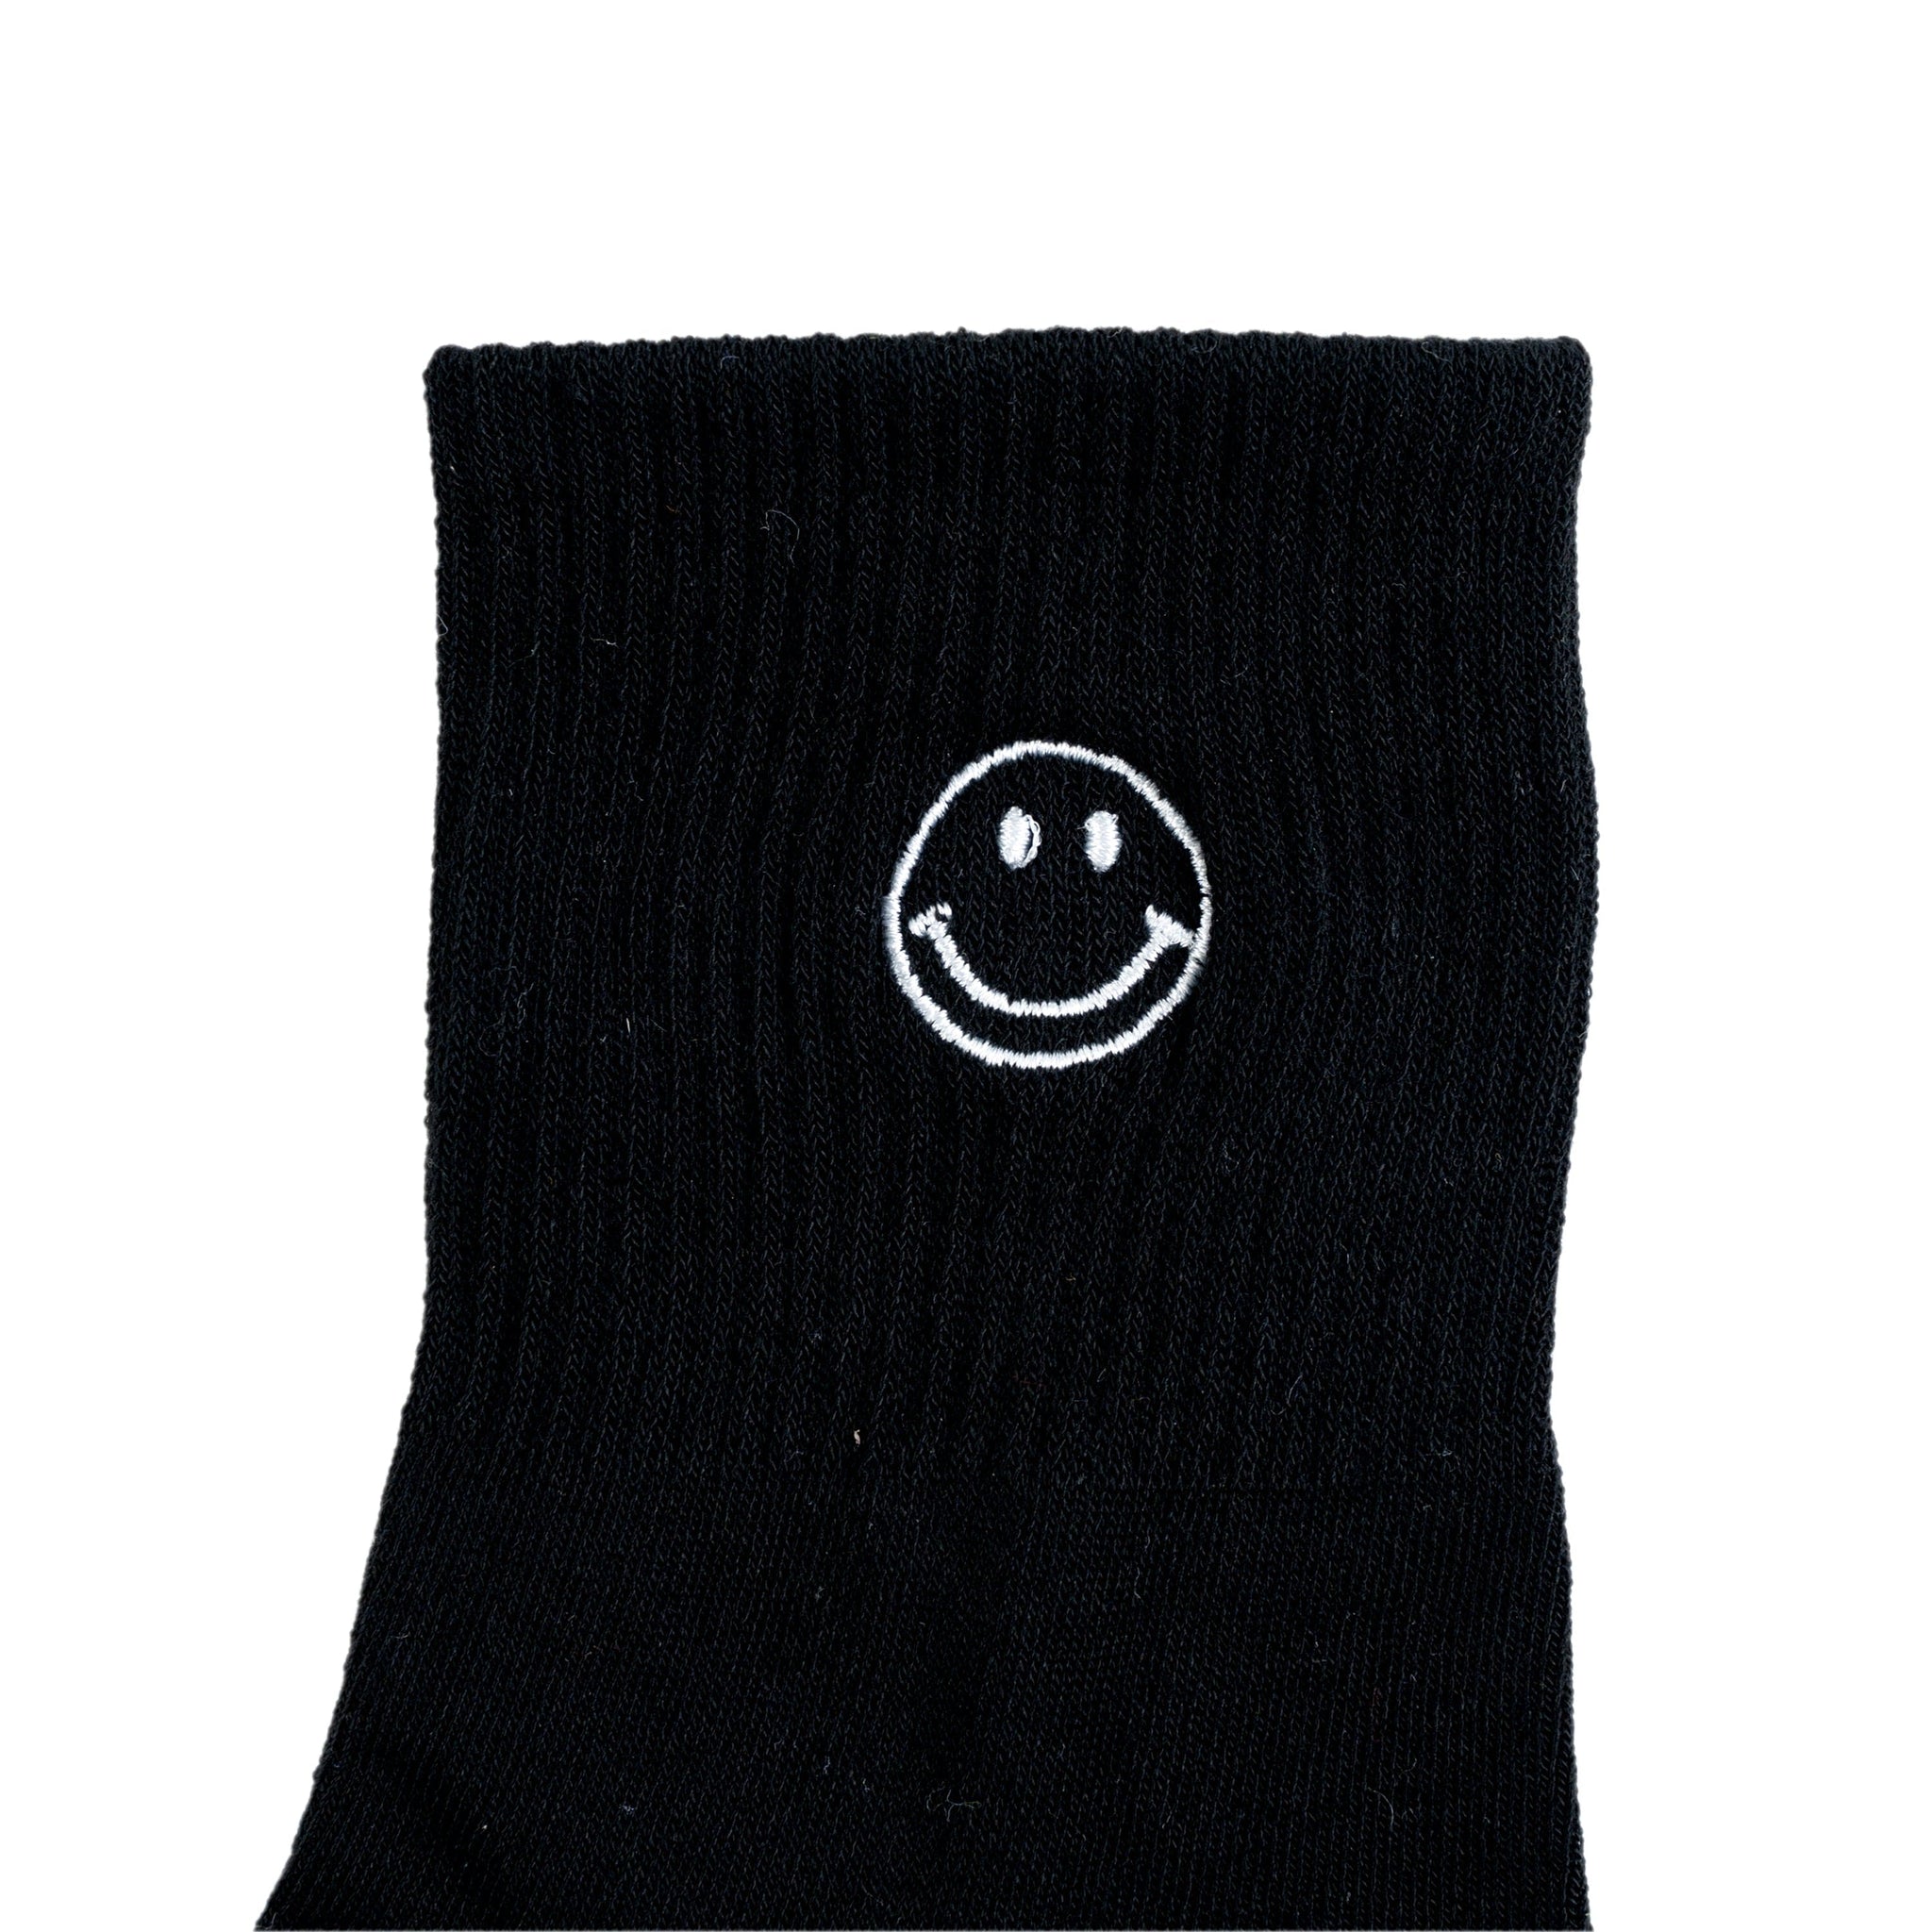 Chokore Embroidered Smiley Socks (Black)